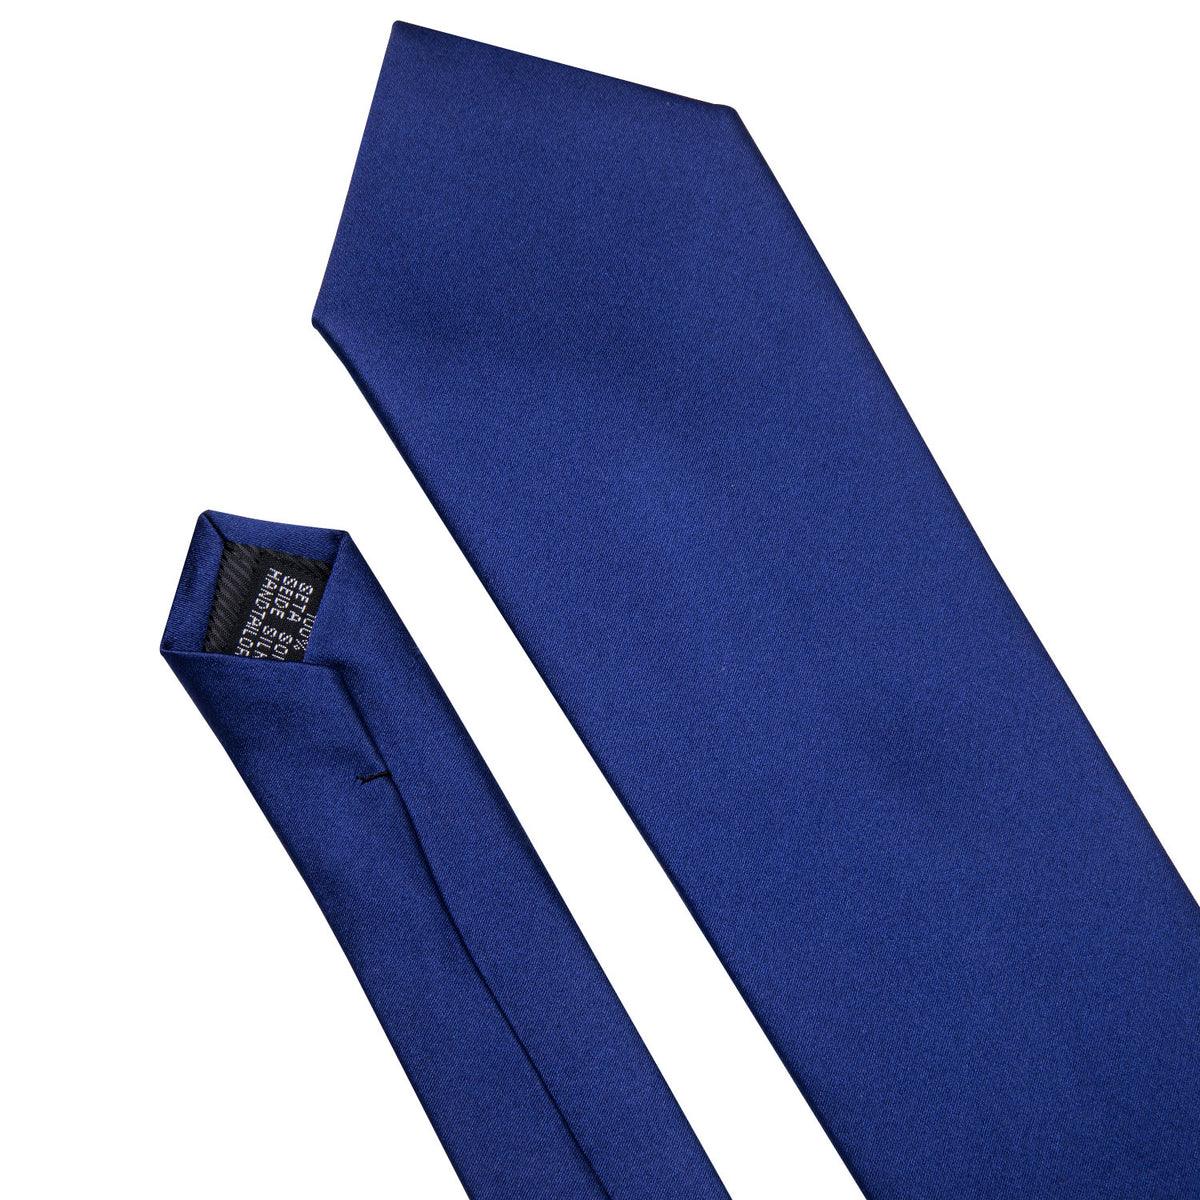 Royal Blue Solid Silk Tie Pocket Square Cufflink Set - STYLETIE